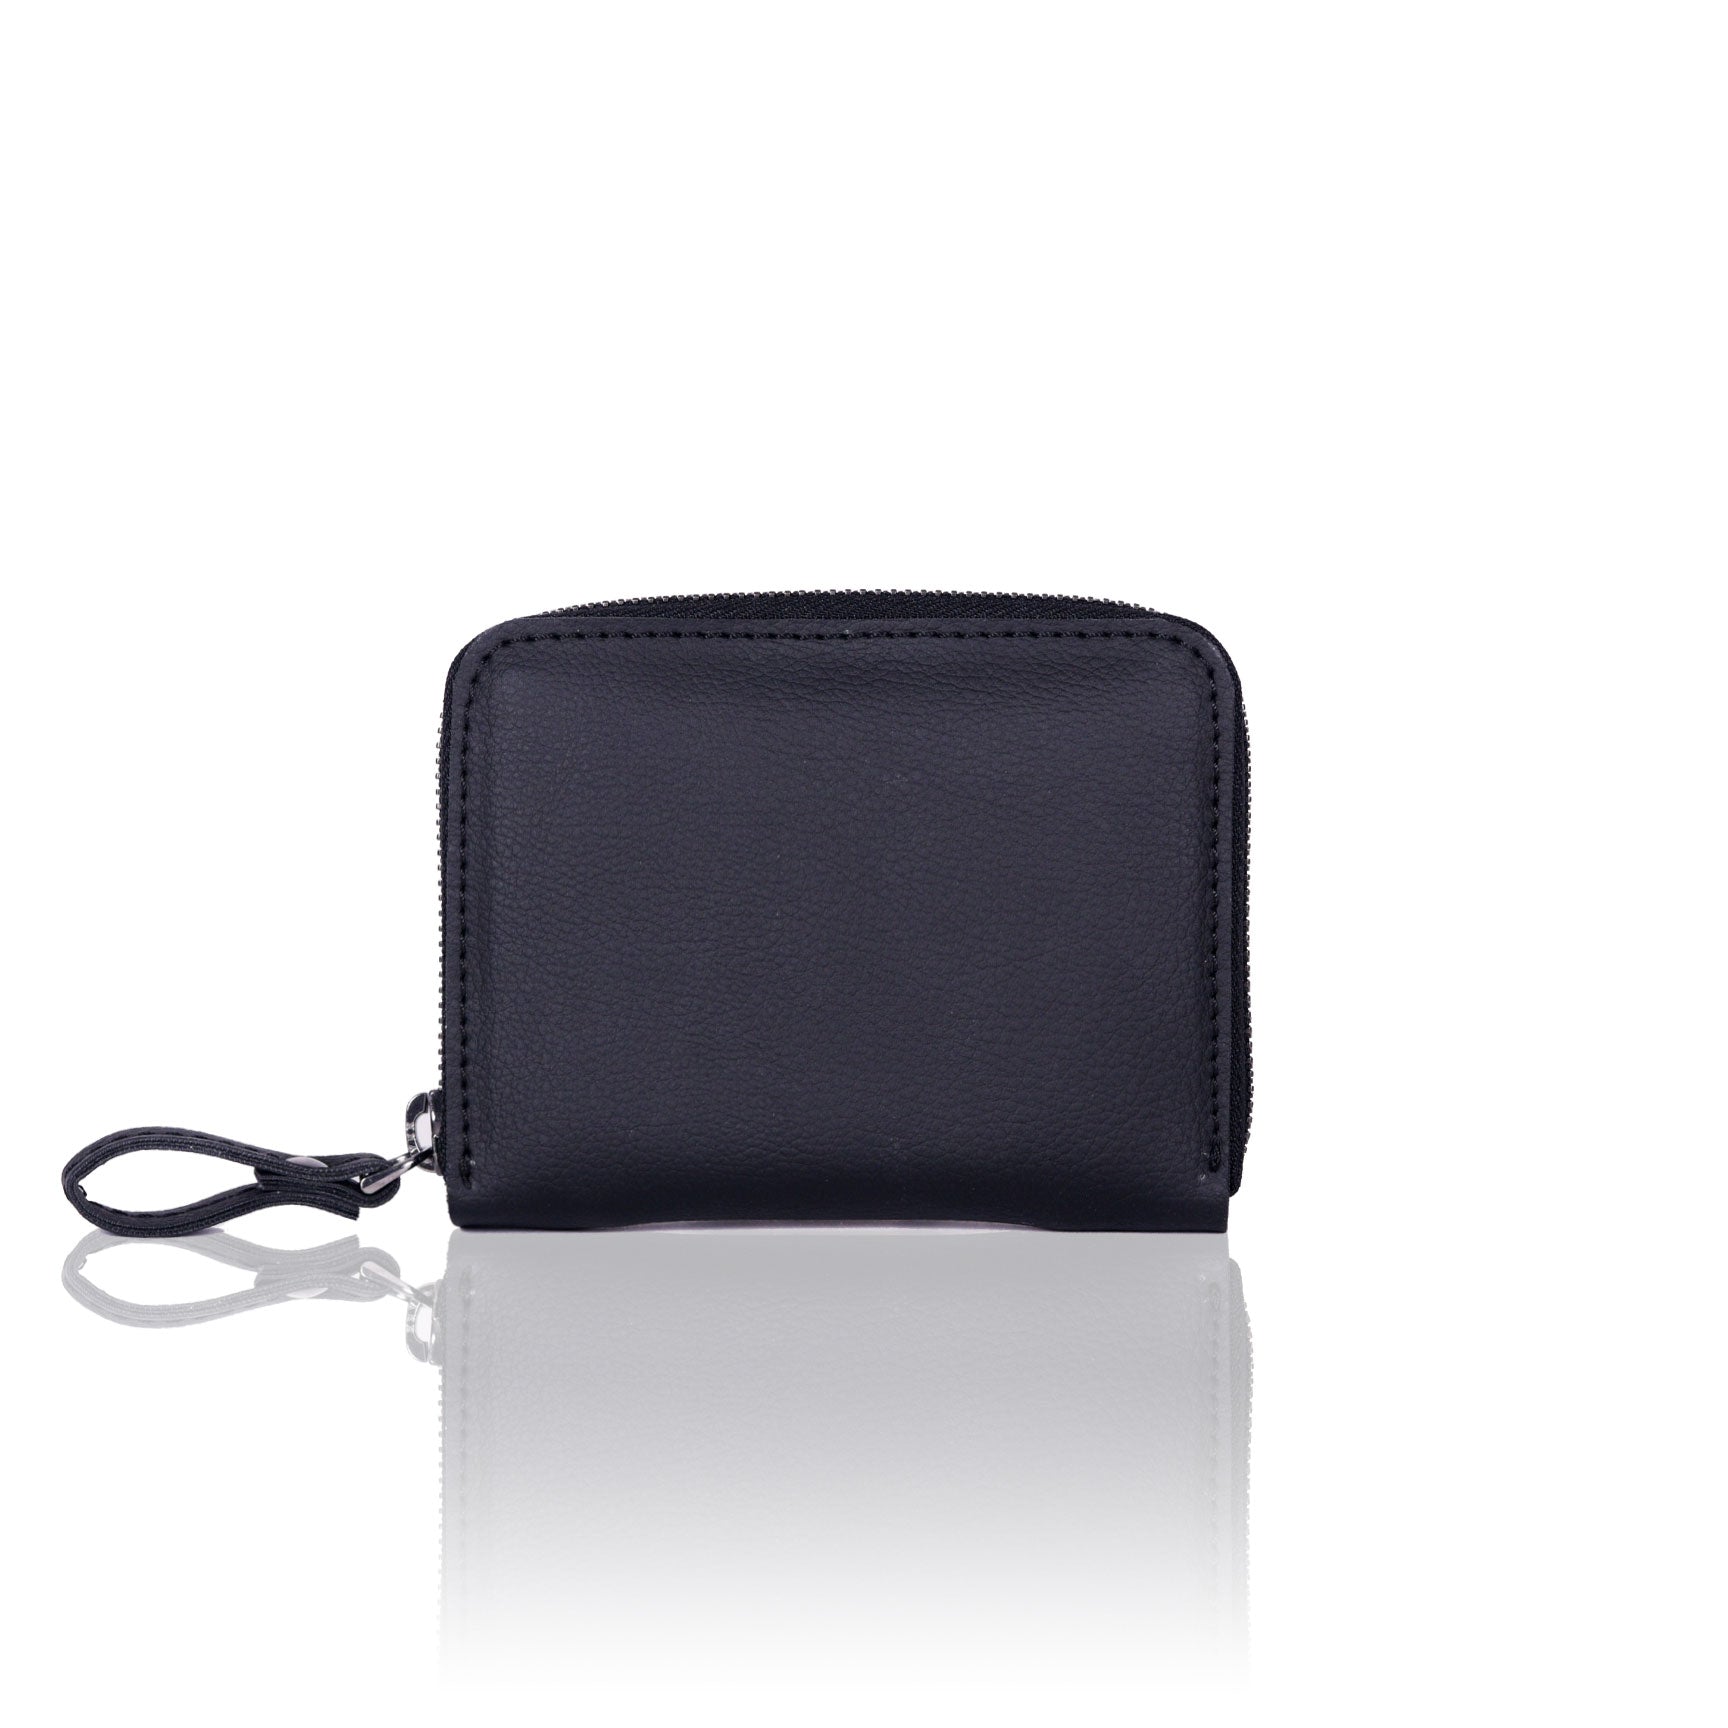 Grape Zipped Wallet - Premium Handbag & Wallet Accessories from L&E Studio